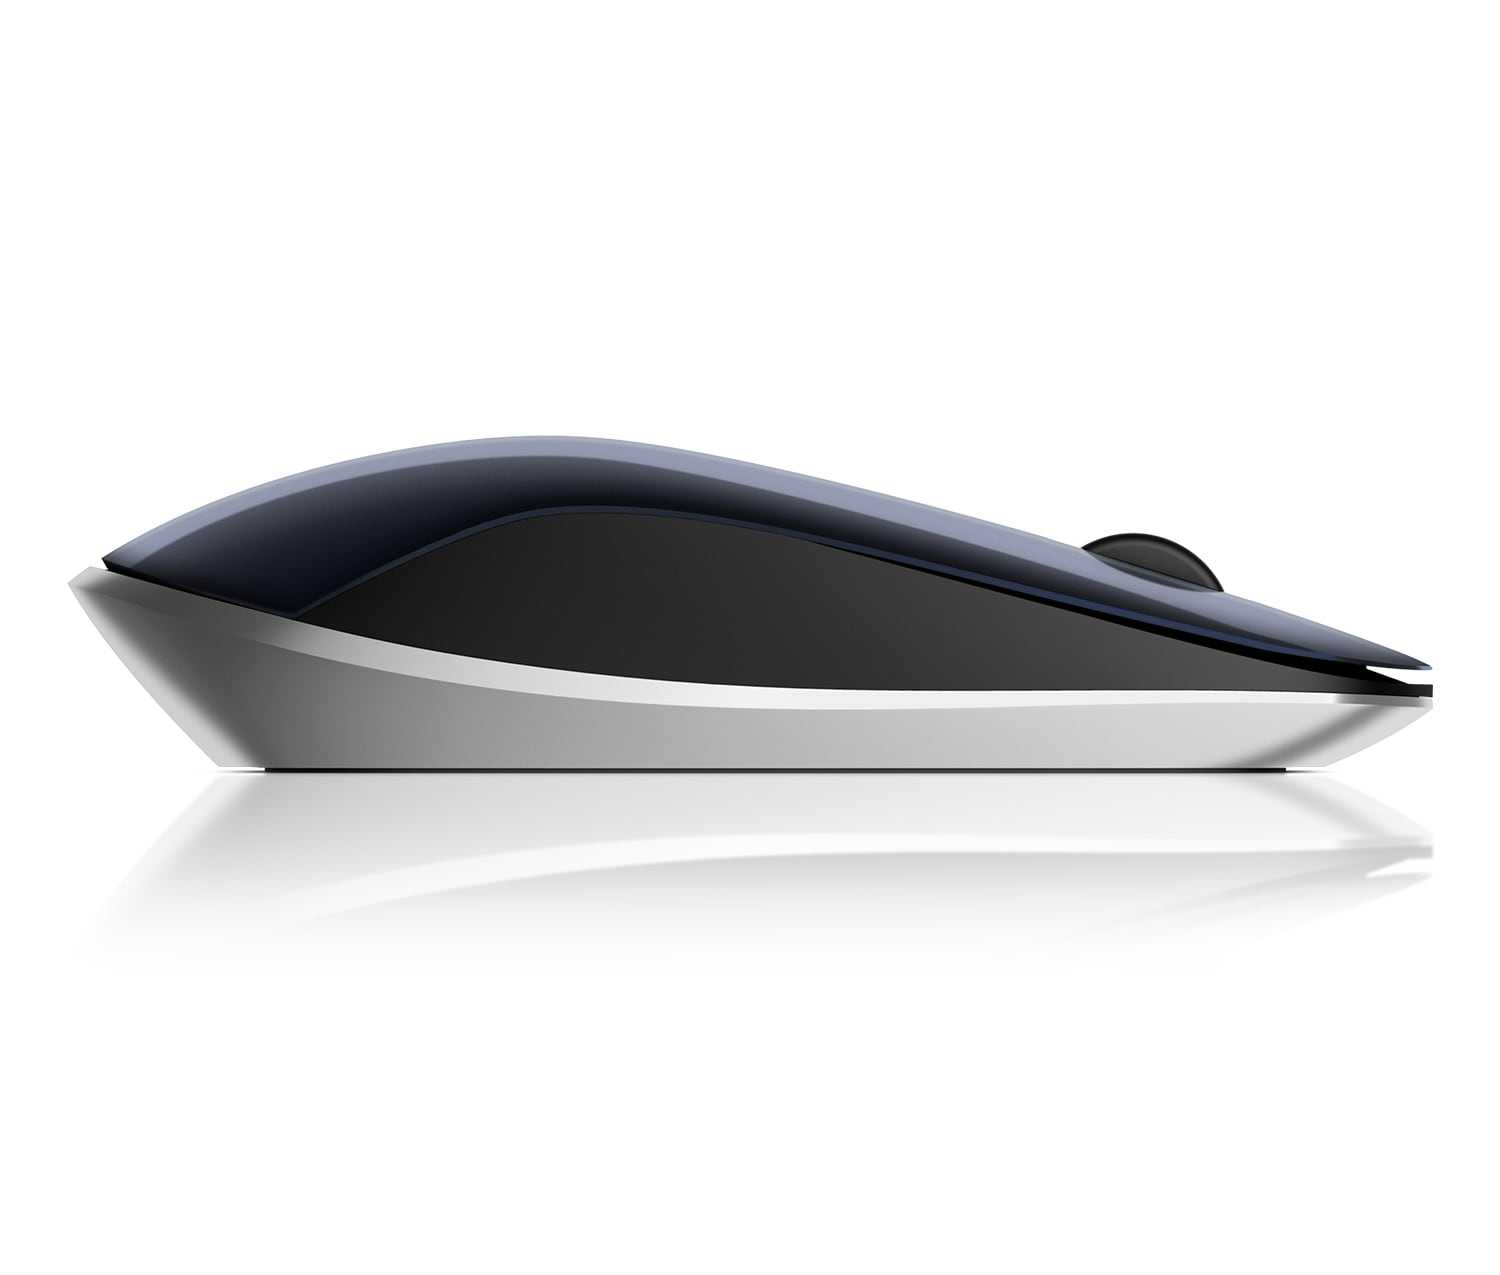 Hp z4000 mouse e8h26aa purple usb - купить , скидки, цена, отзывы, обзор, характеристики - мыши